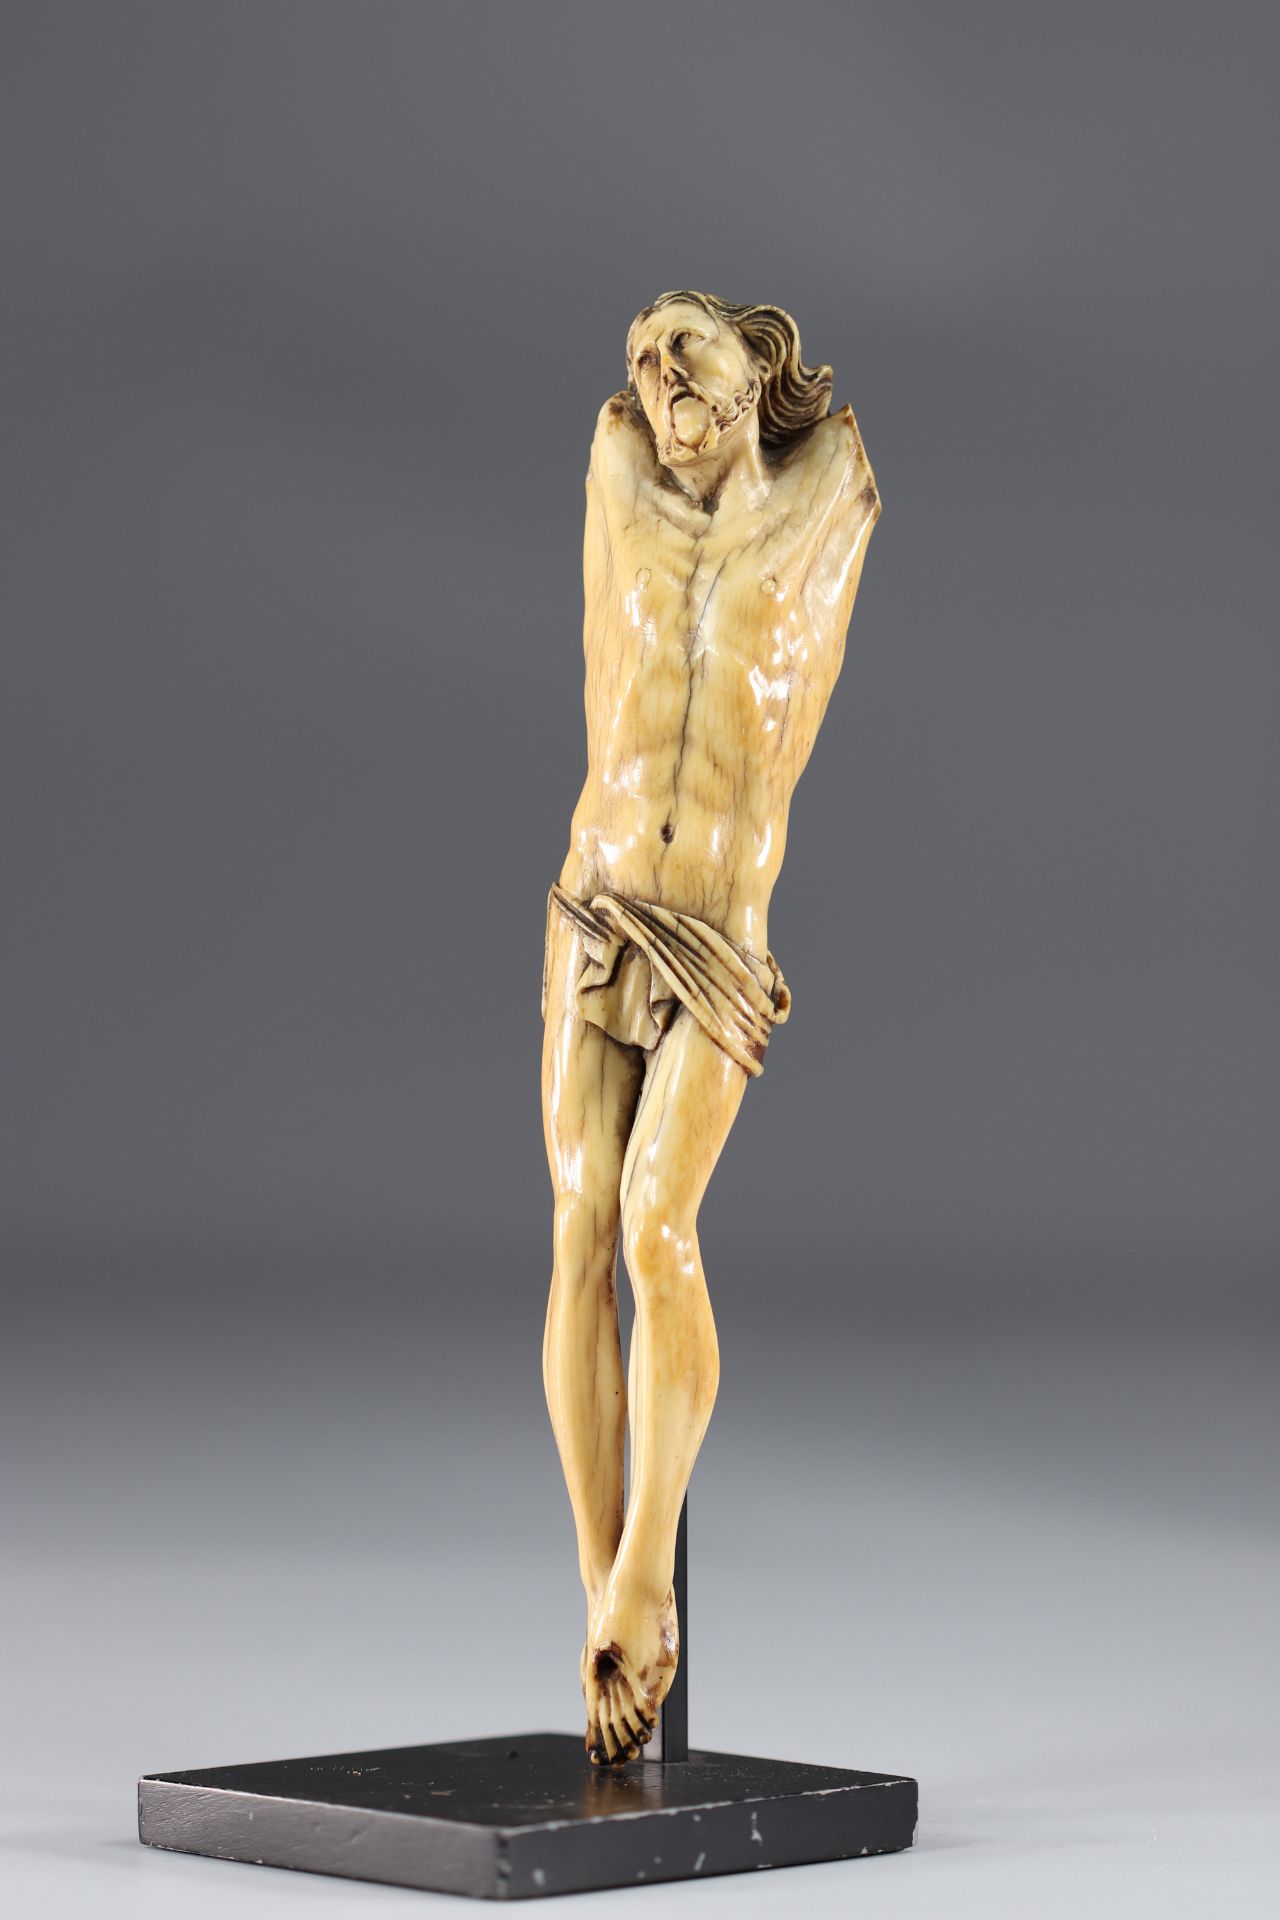 Corpus Christi - Ivory - arm missing - Image 2 of 3